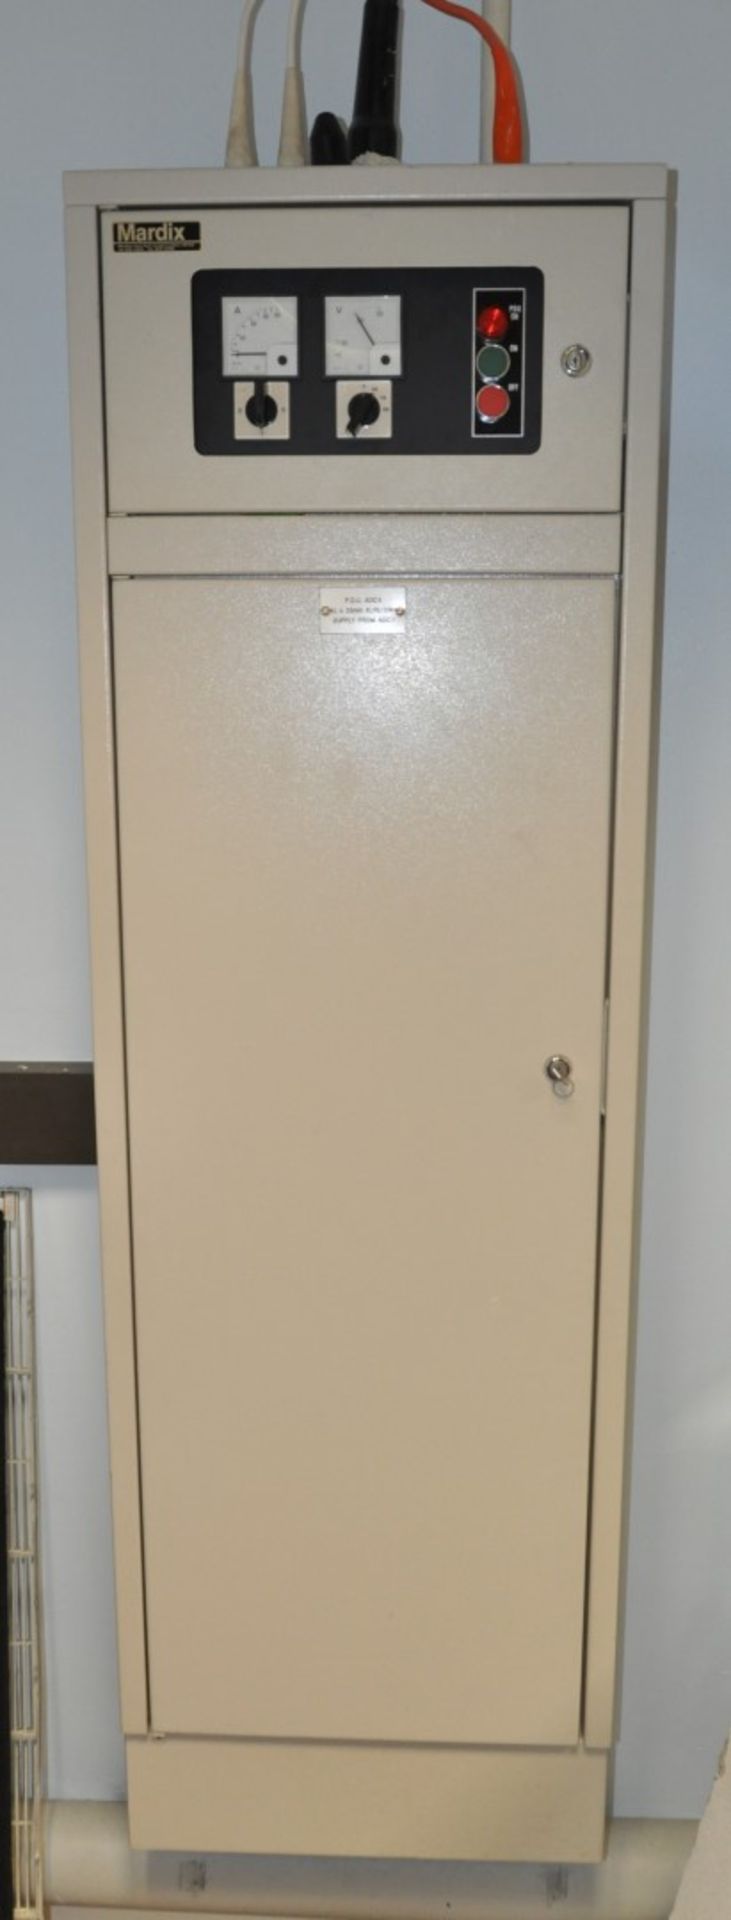 1 x Mardix Power Distribution Unit Cabinet - PDU ADC5 - 163 x 50 cms - Ref L57 1F - Buyer to